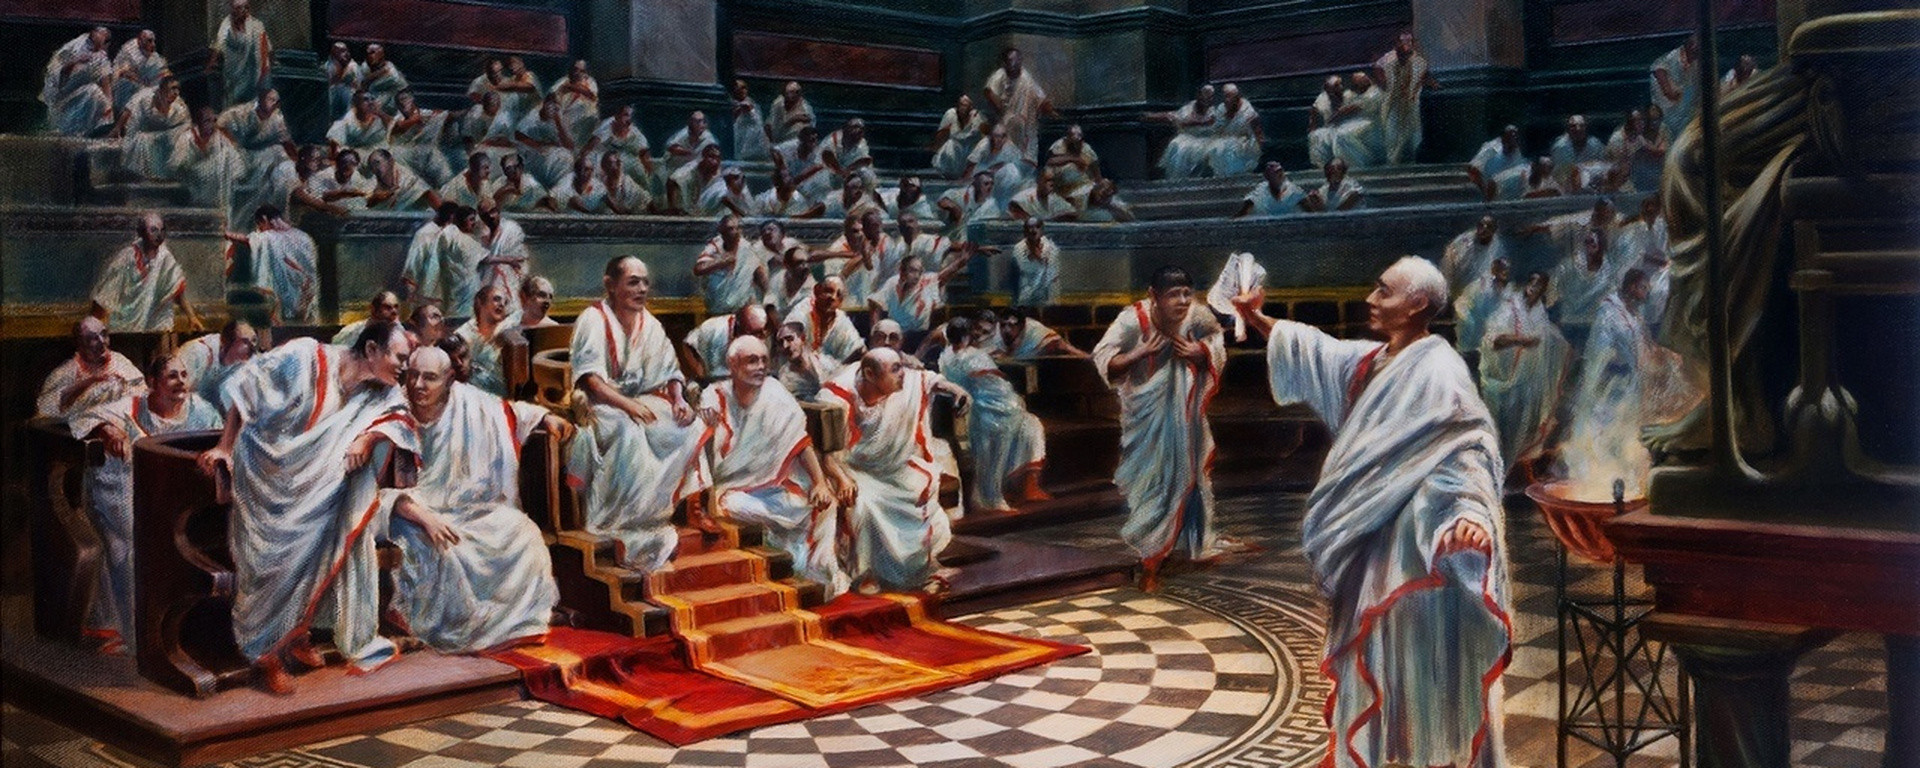 Заседание римского сената